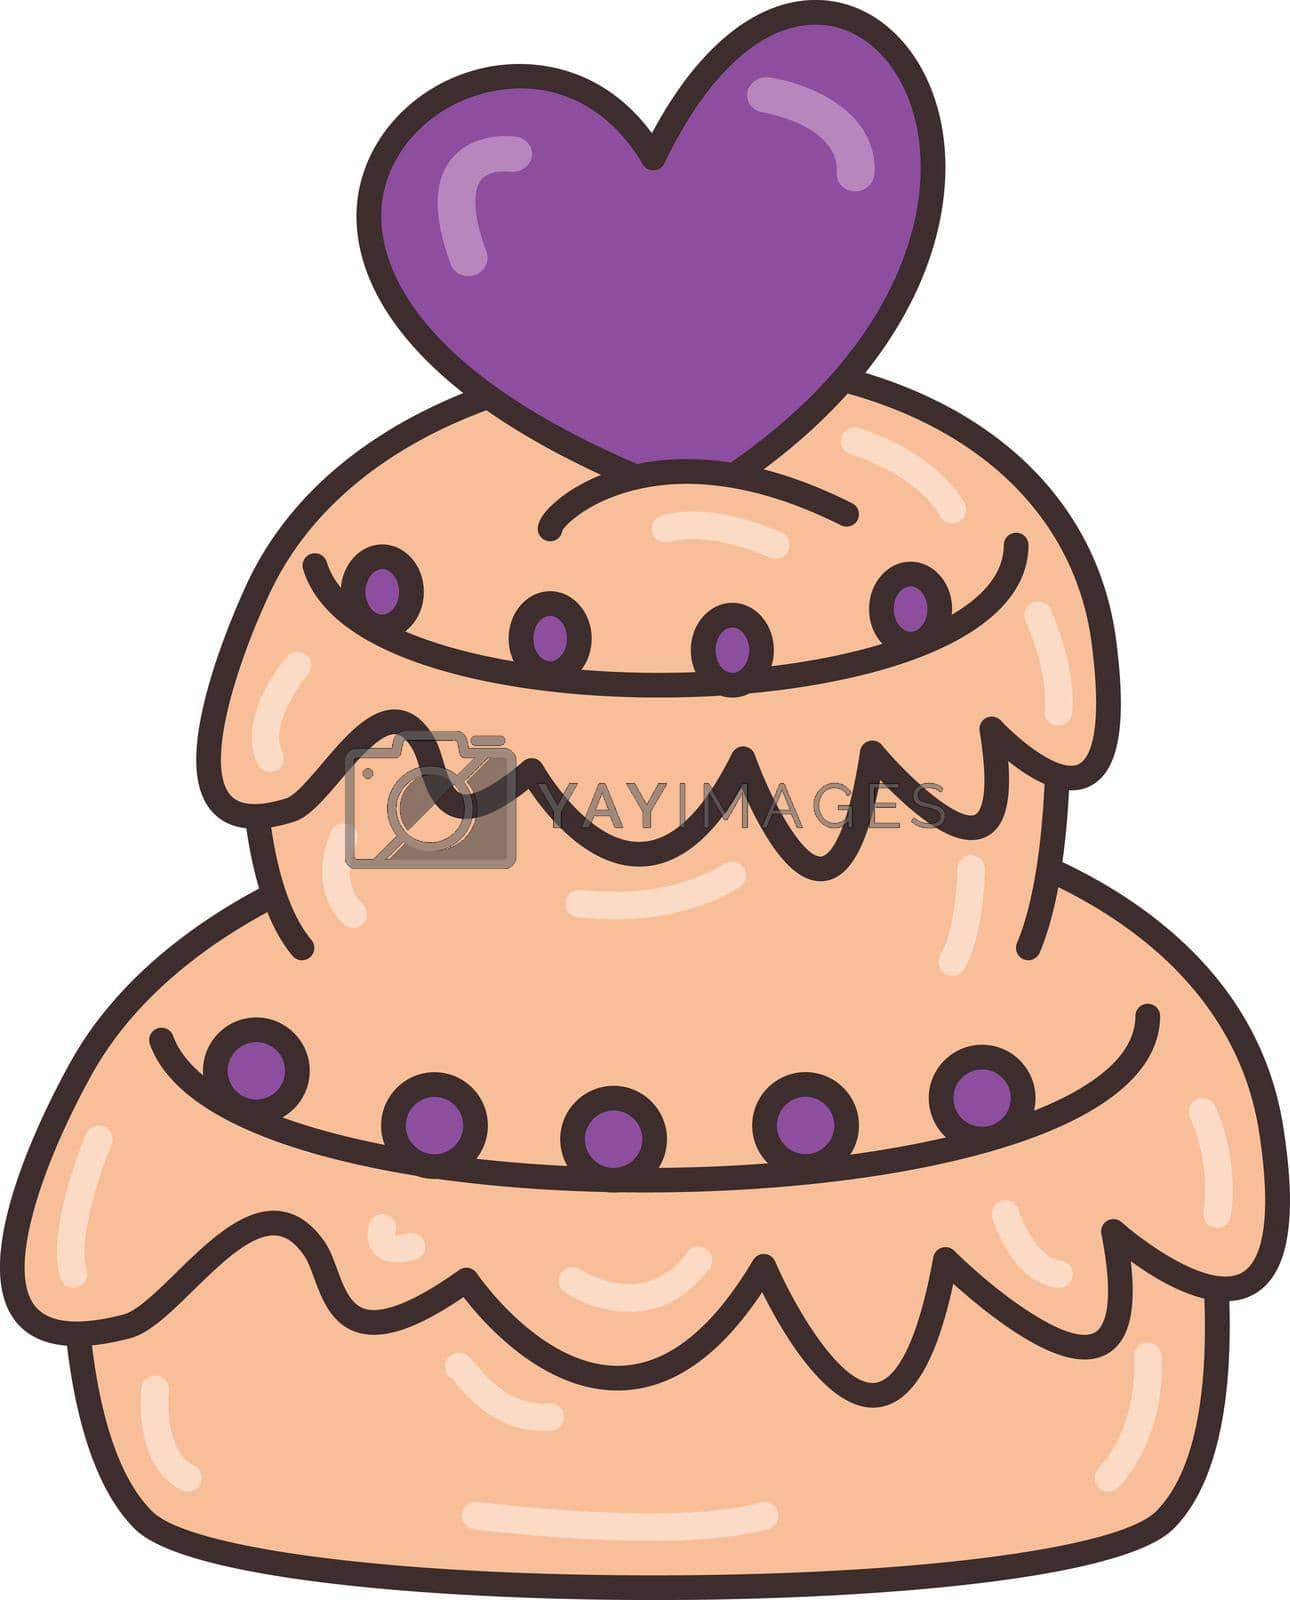 Royalty free image of cake by FlaticonsDesign